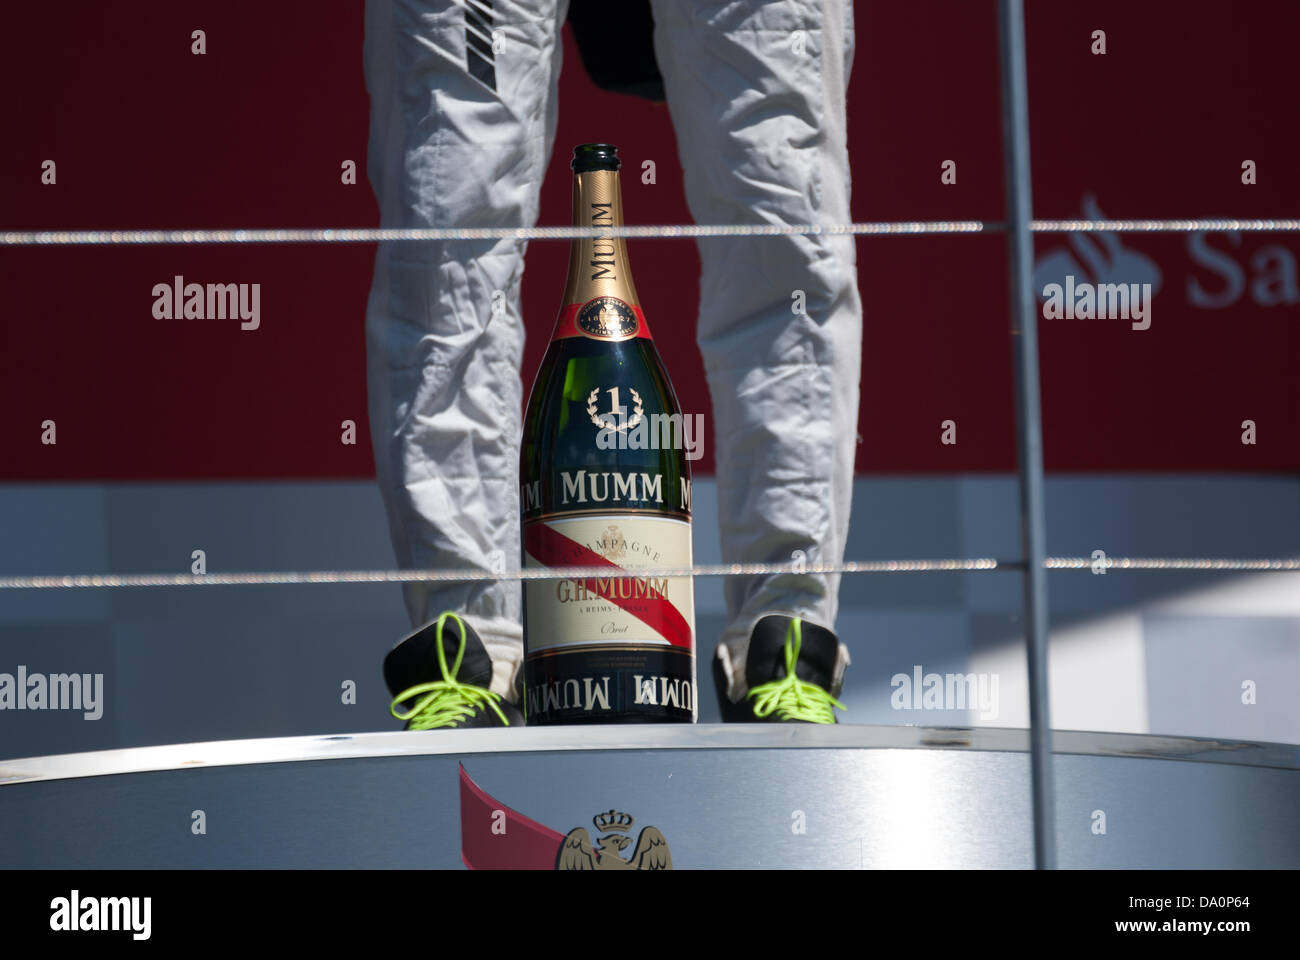 Nico Rosberg celebrates winning the British Formula One (F1) Grand Prix, Silverstone, UK Stock Photo